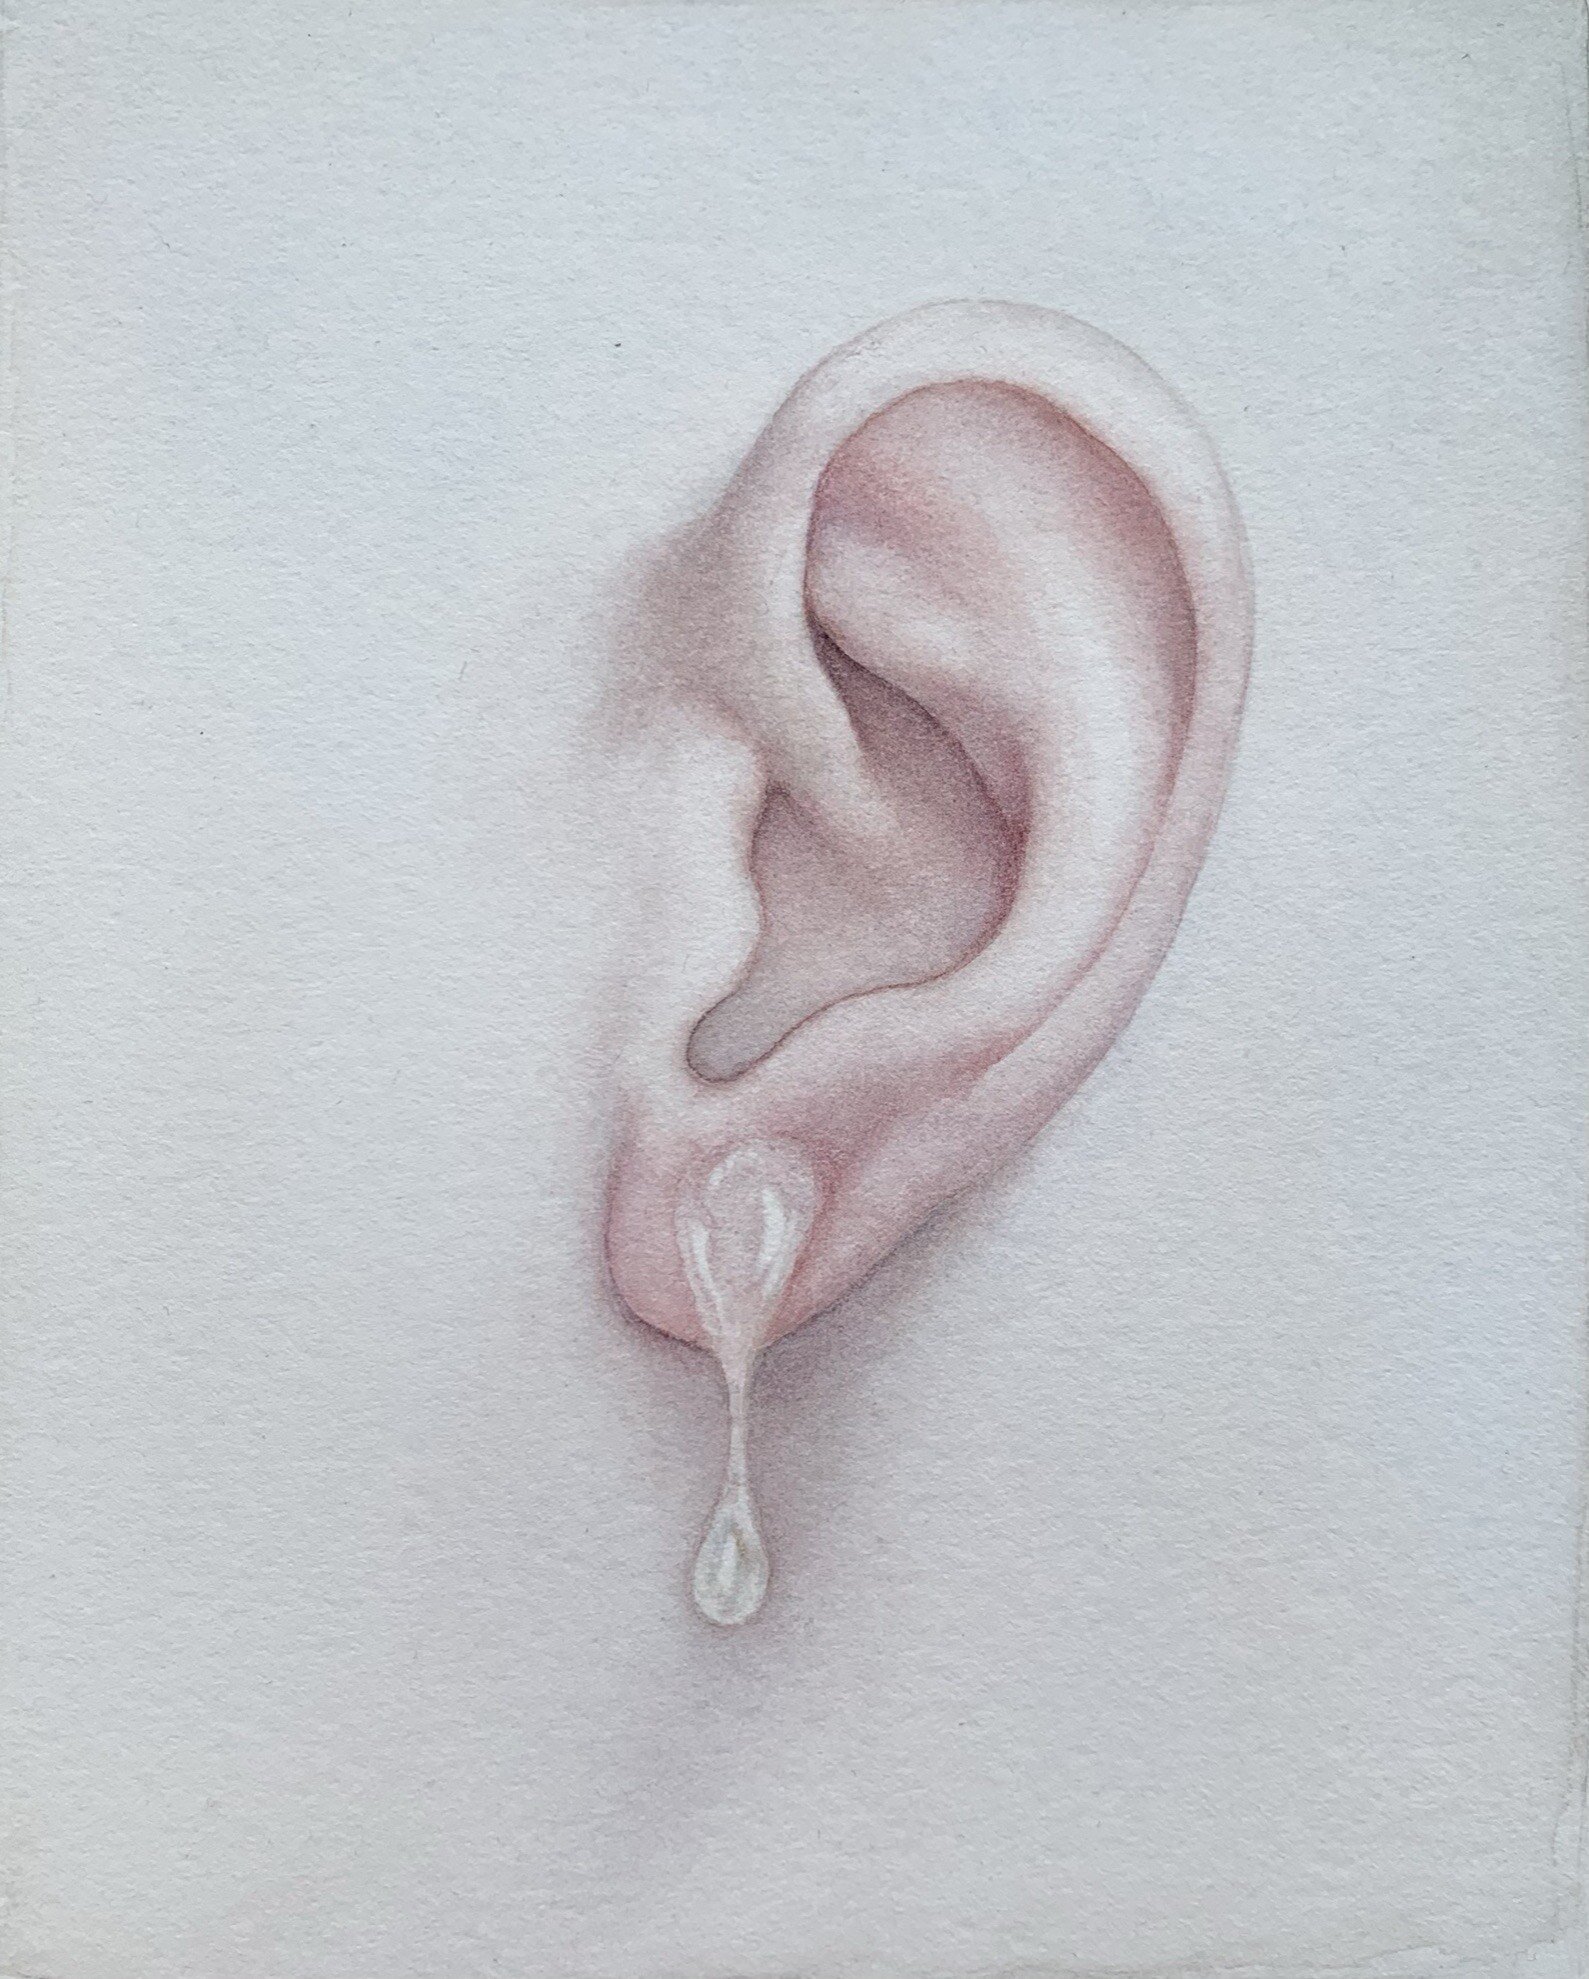 Nikolay Tolmachev, Pearl earring, Aquarelle sur papier 17,5 x 14 cm, 2020.jpeg